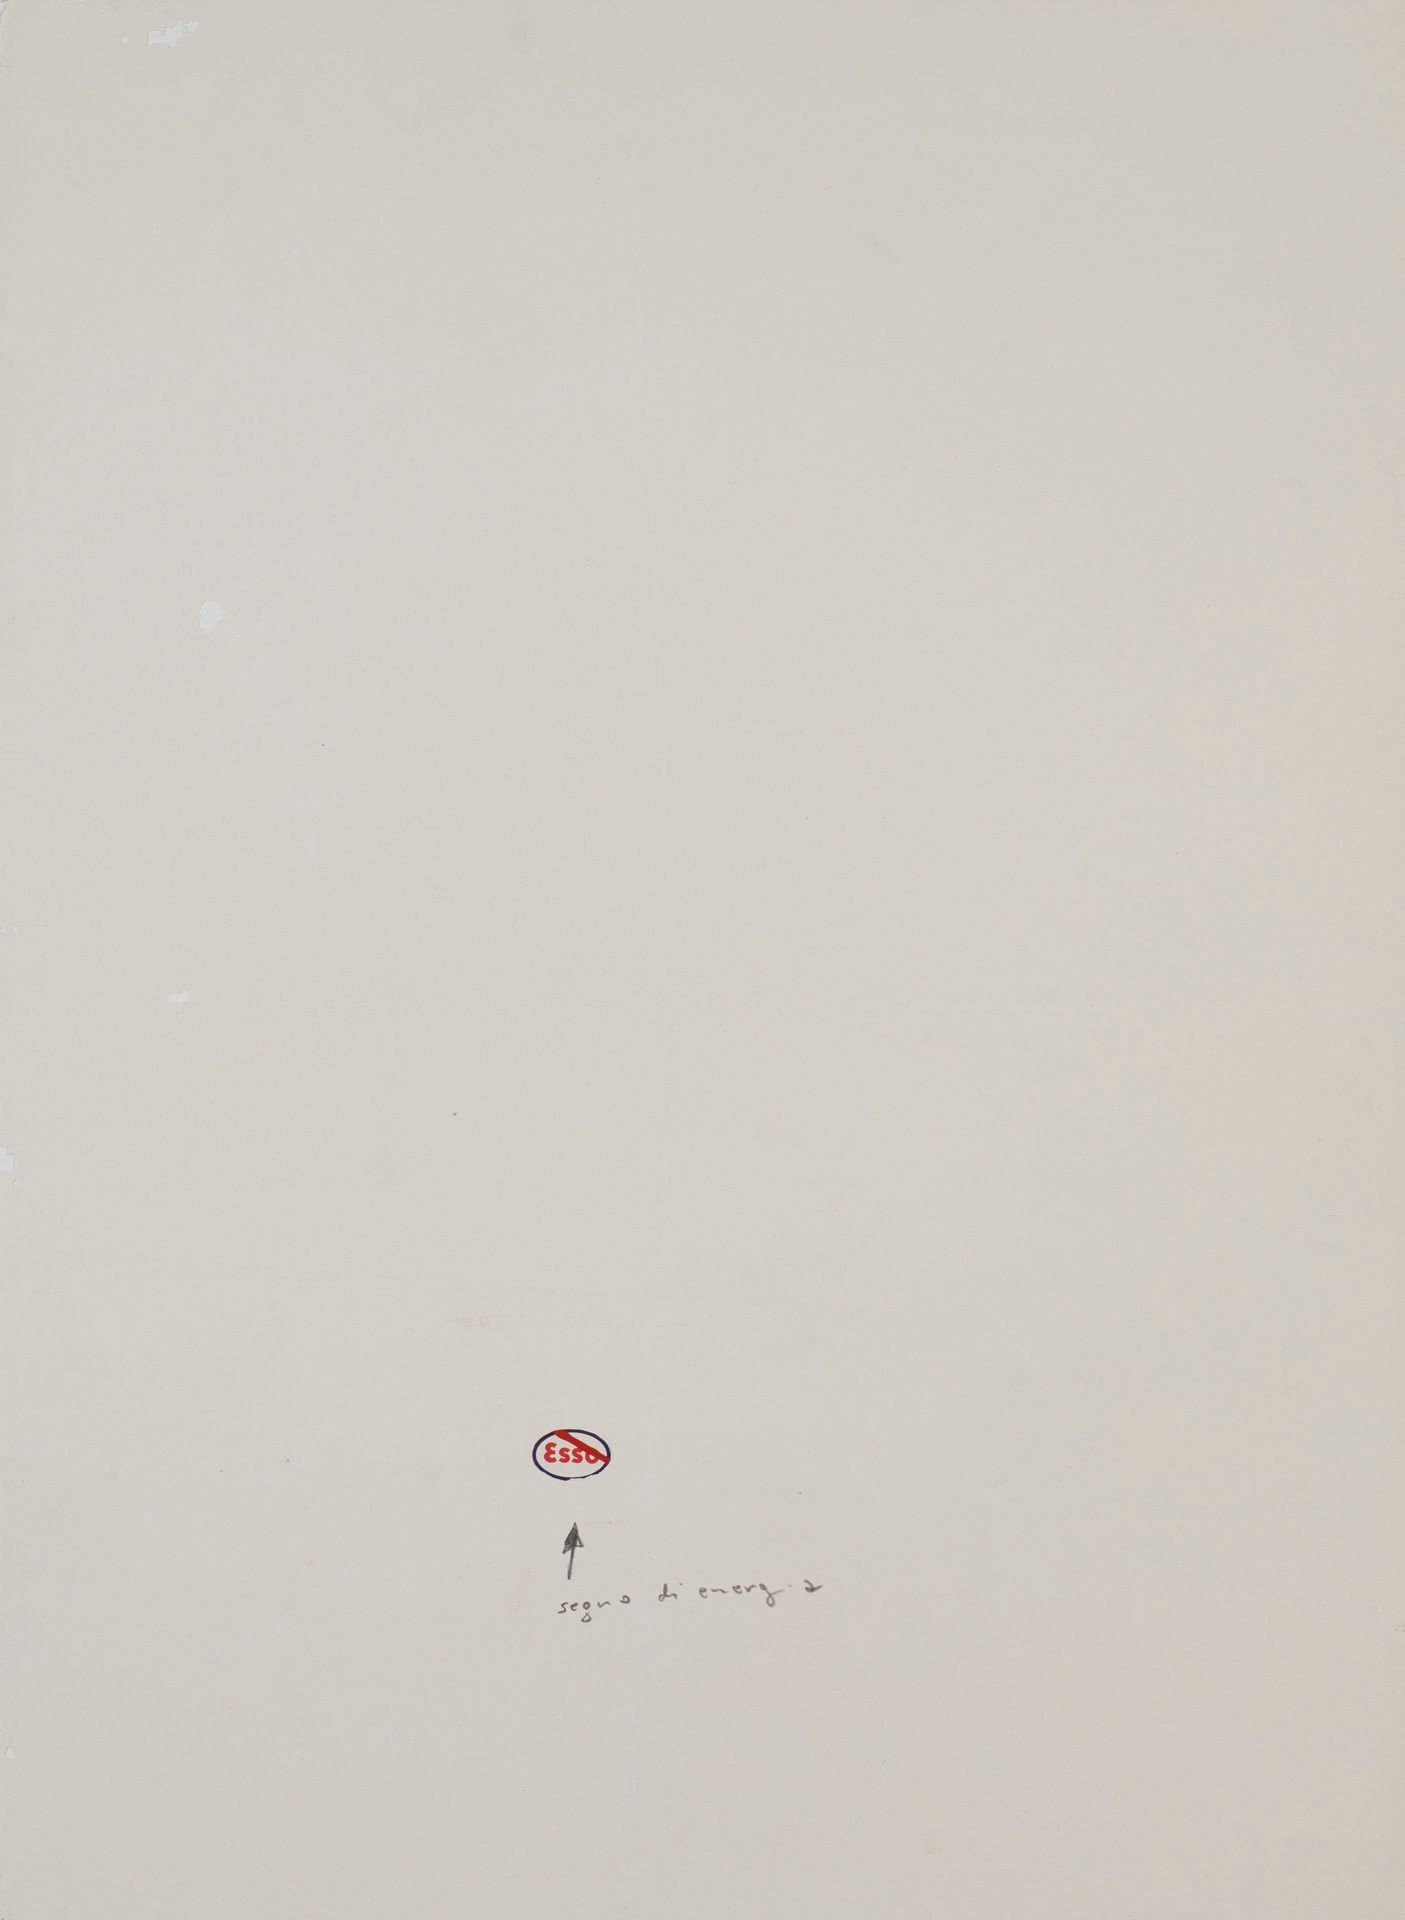 Mario Schifano (Al-Chums 1934 - Rom/Roma 1998) 能源之路，1962年；纸板和拼贴画，57.5 X 42 _x000&hellip;